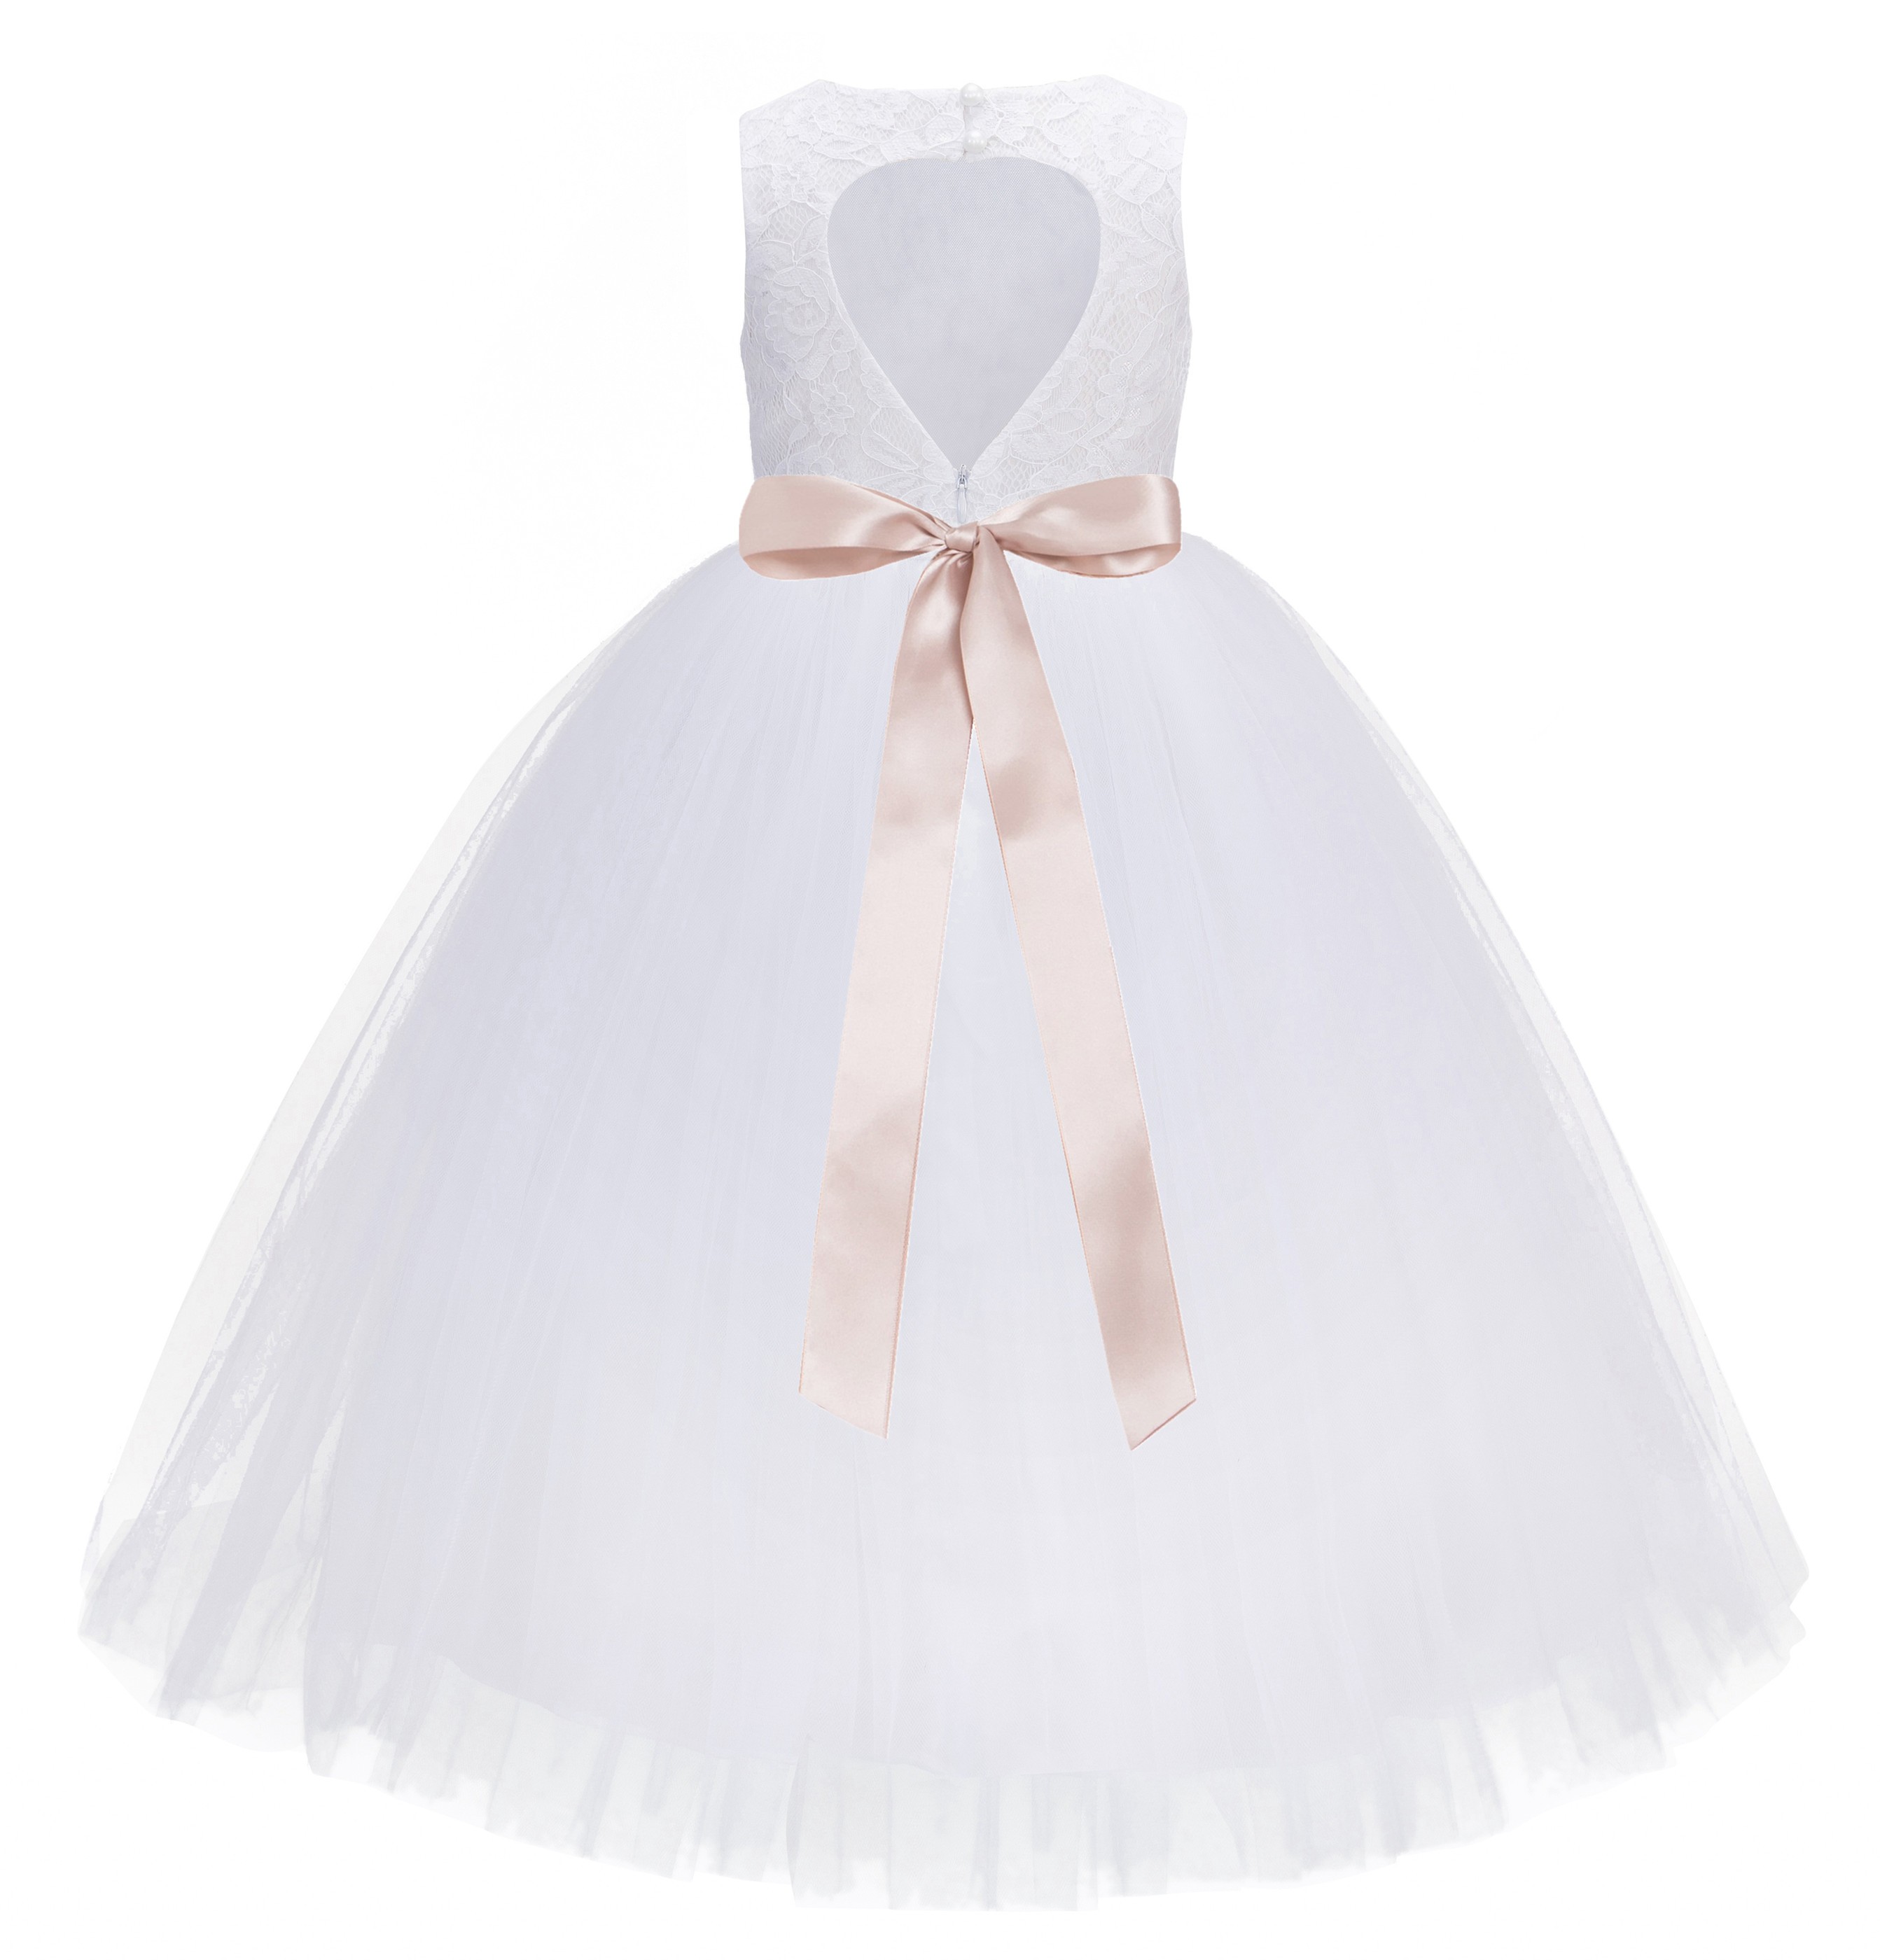 R3 White / Blush Pink Floral Lace Heart Cutout Flower Girl Dress 172R3